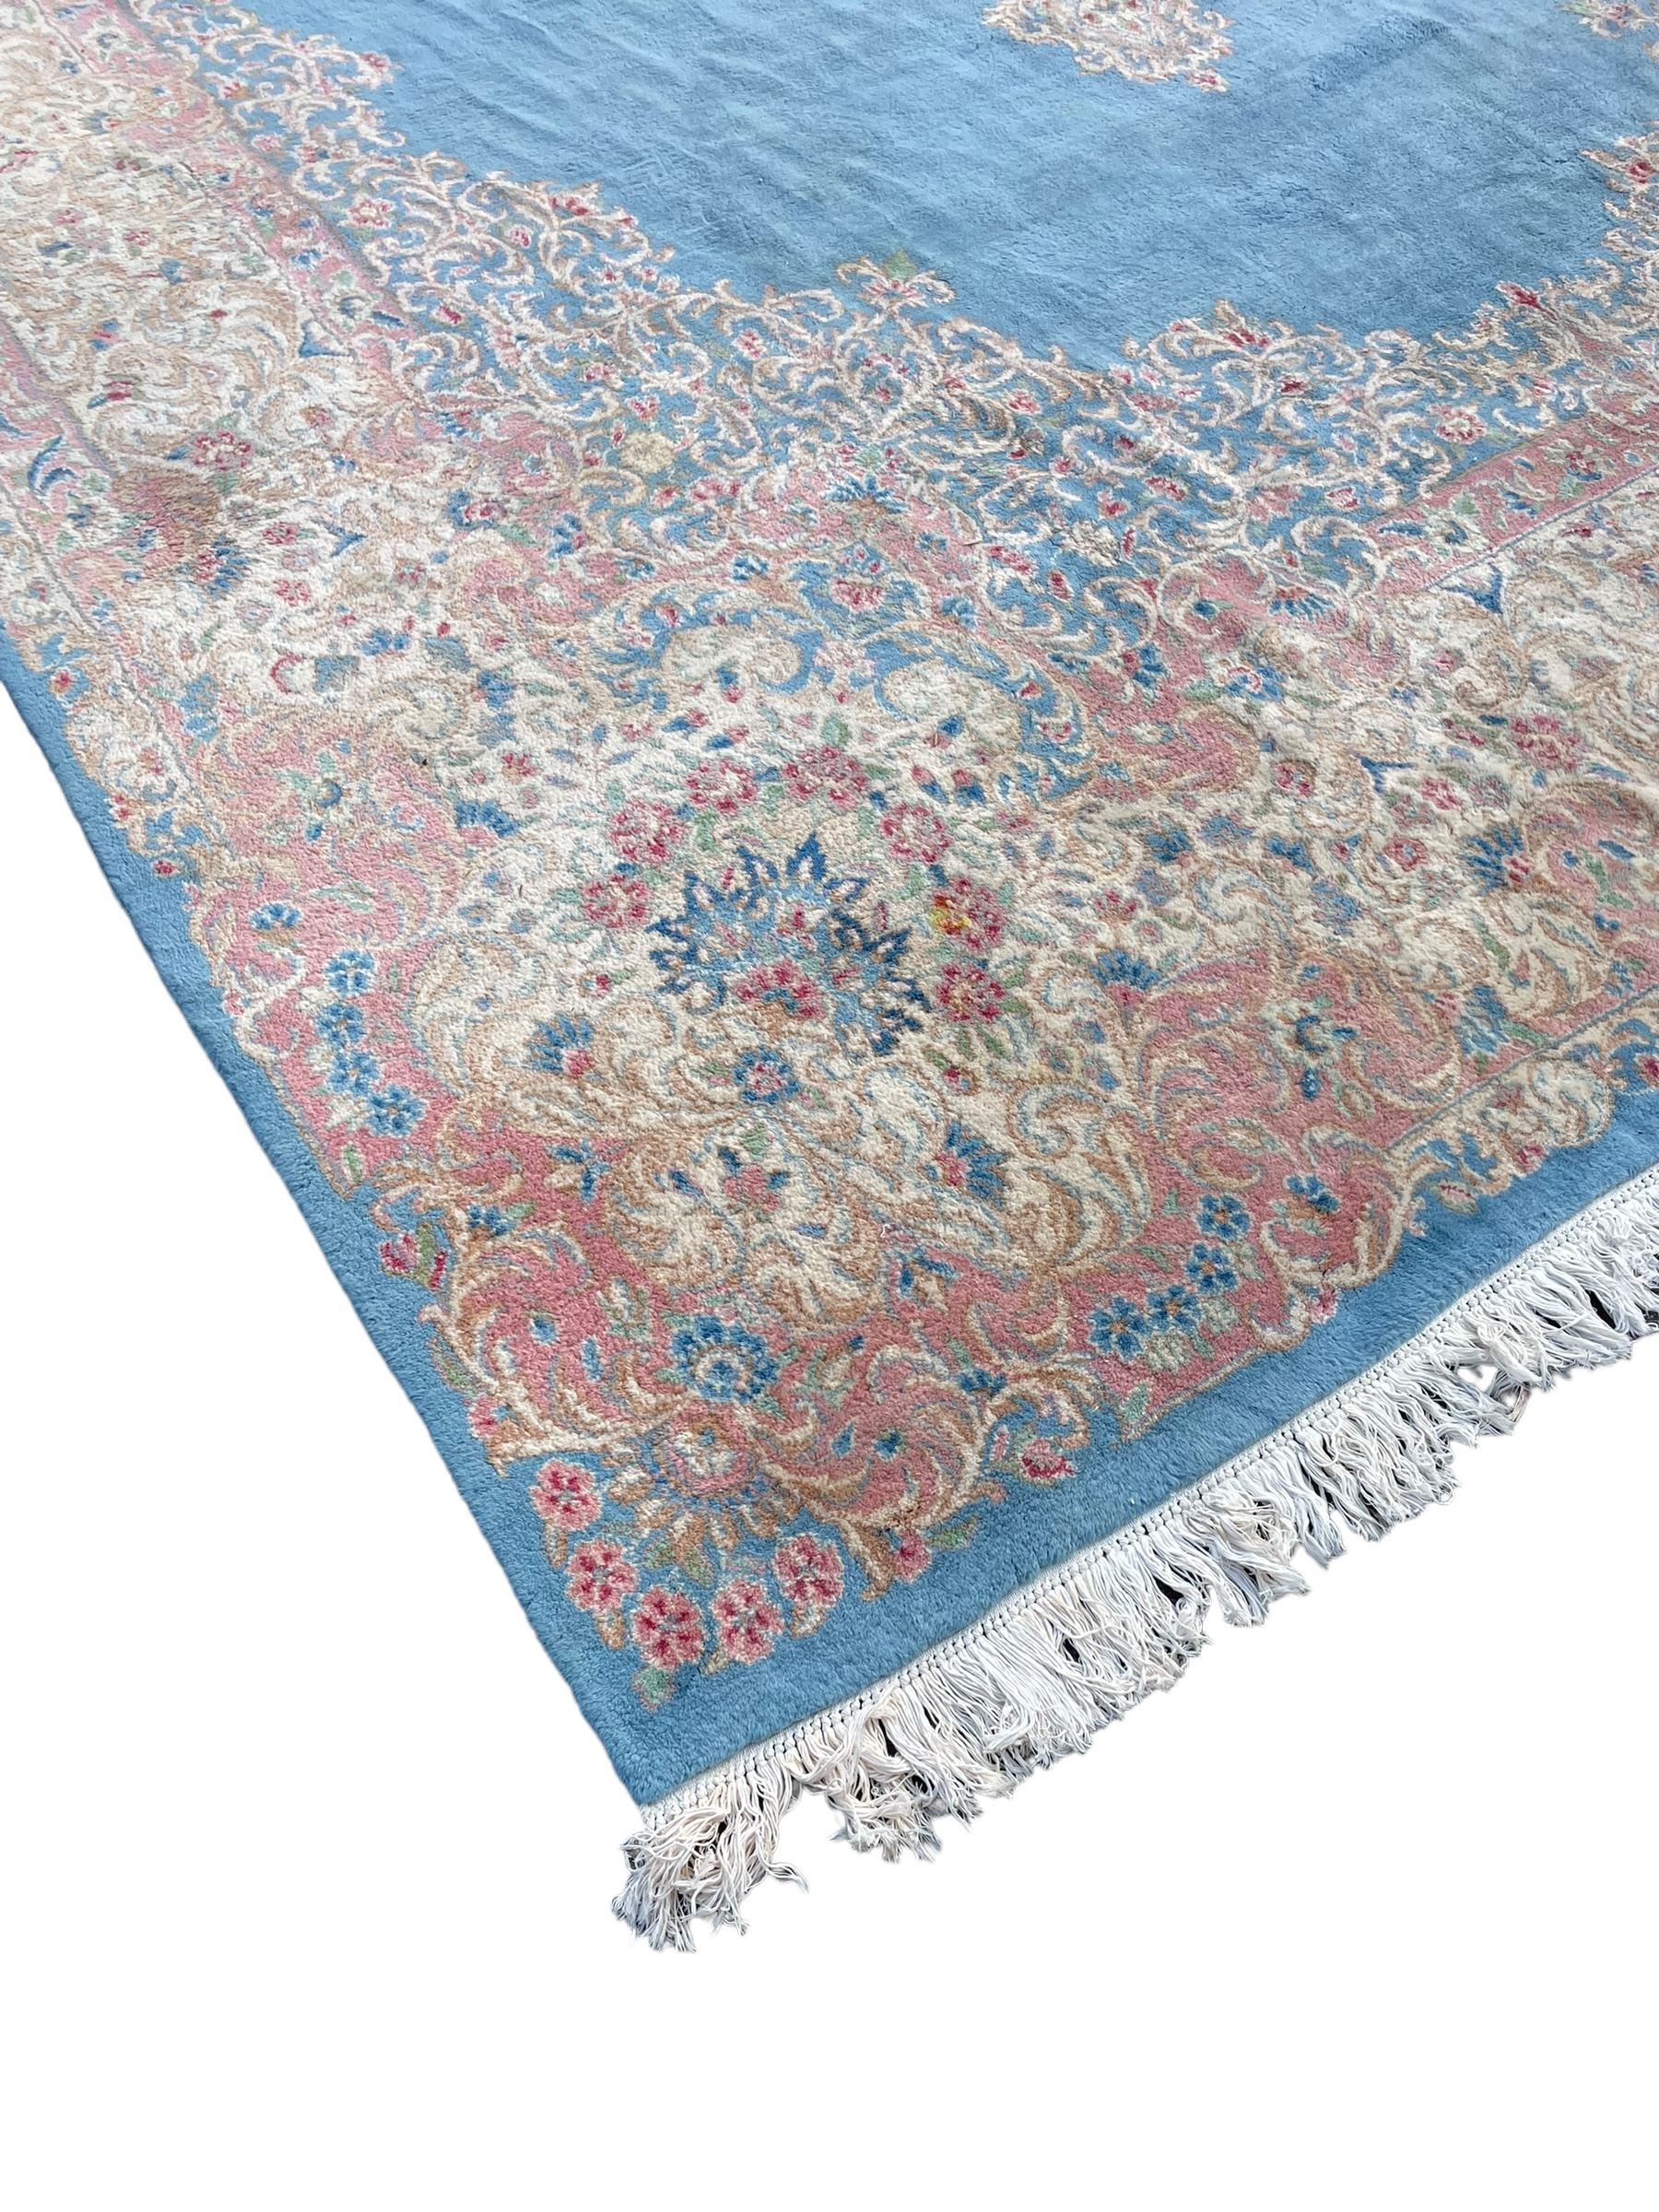 Large Persian design carpet - Image 2 of 8